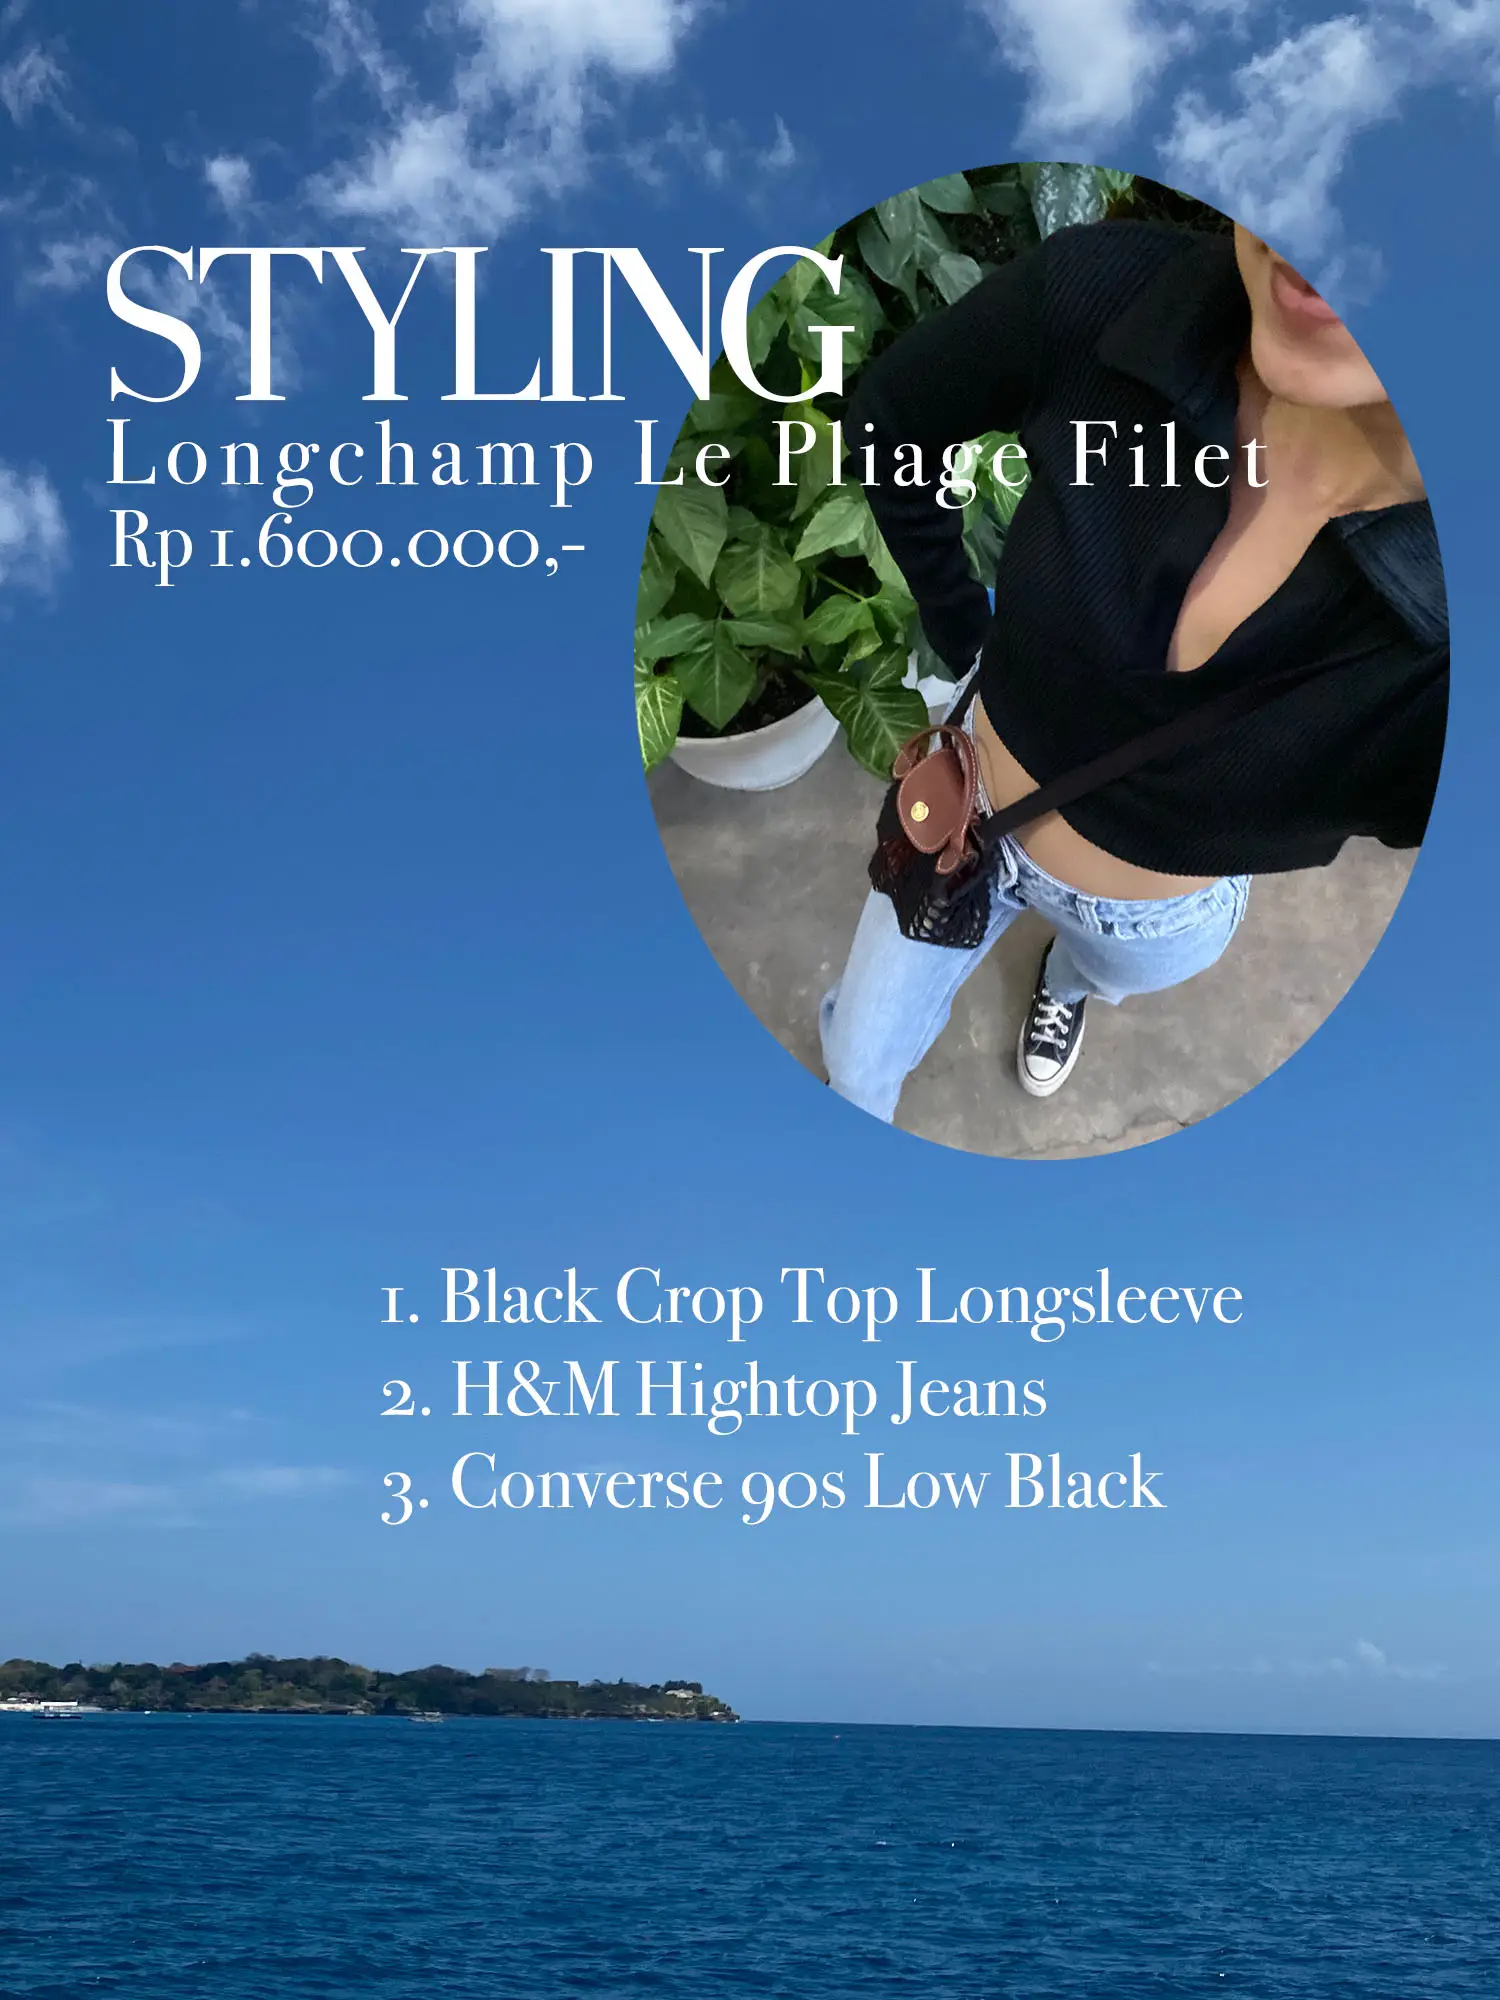 Longchamp Le Pliage Filet Net Bag & Zara Summer Haul Try-on 2021 Pt 1 